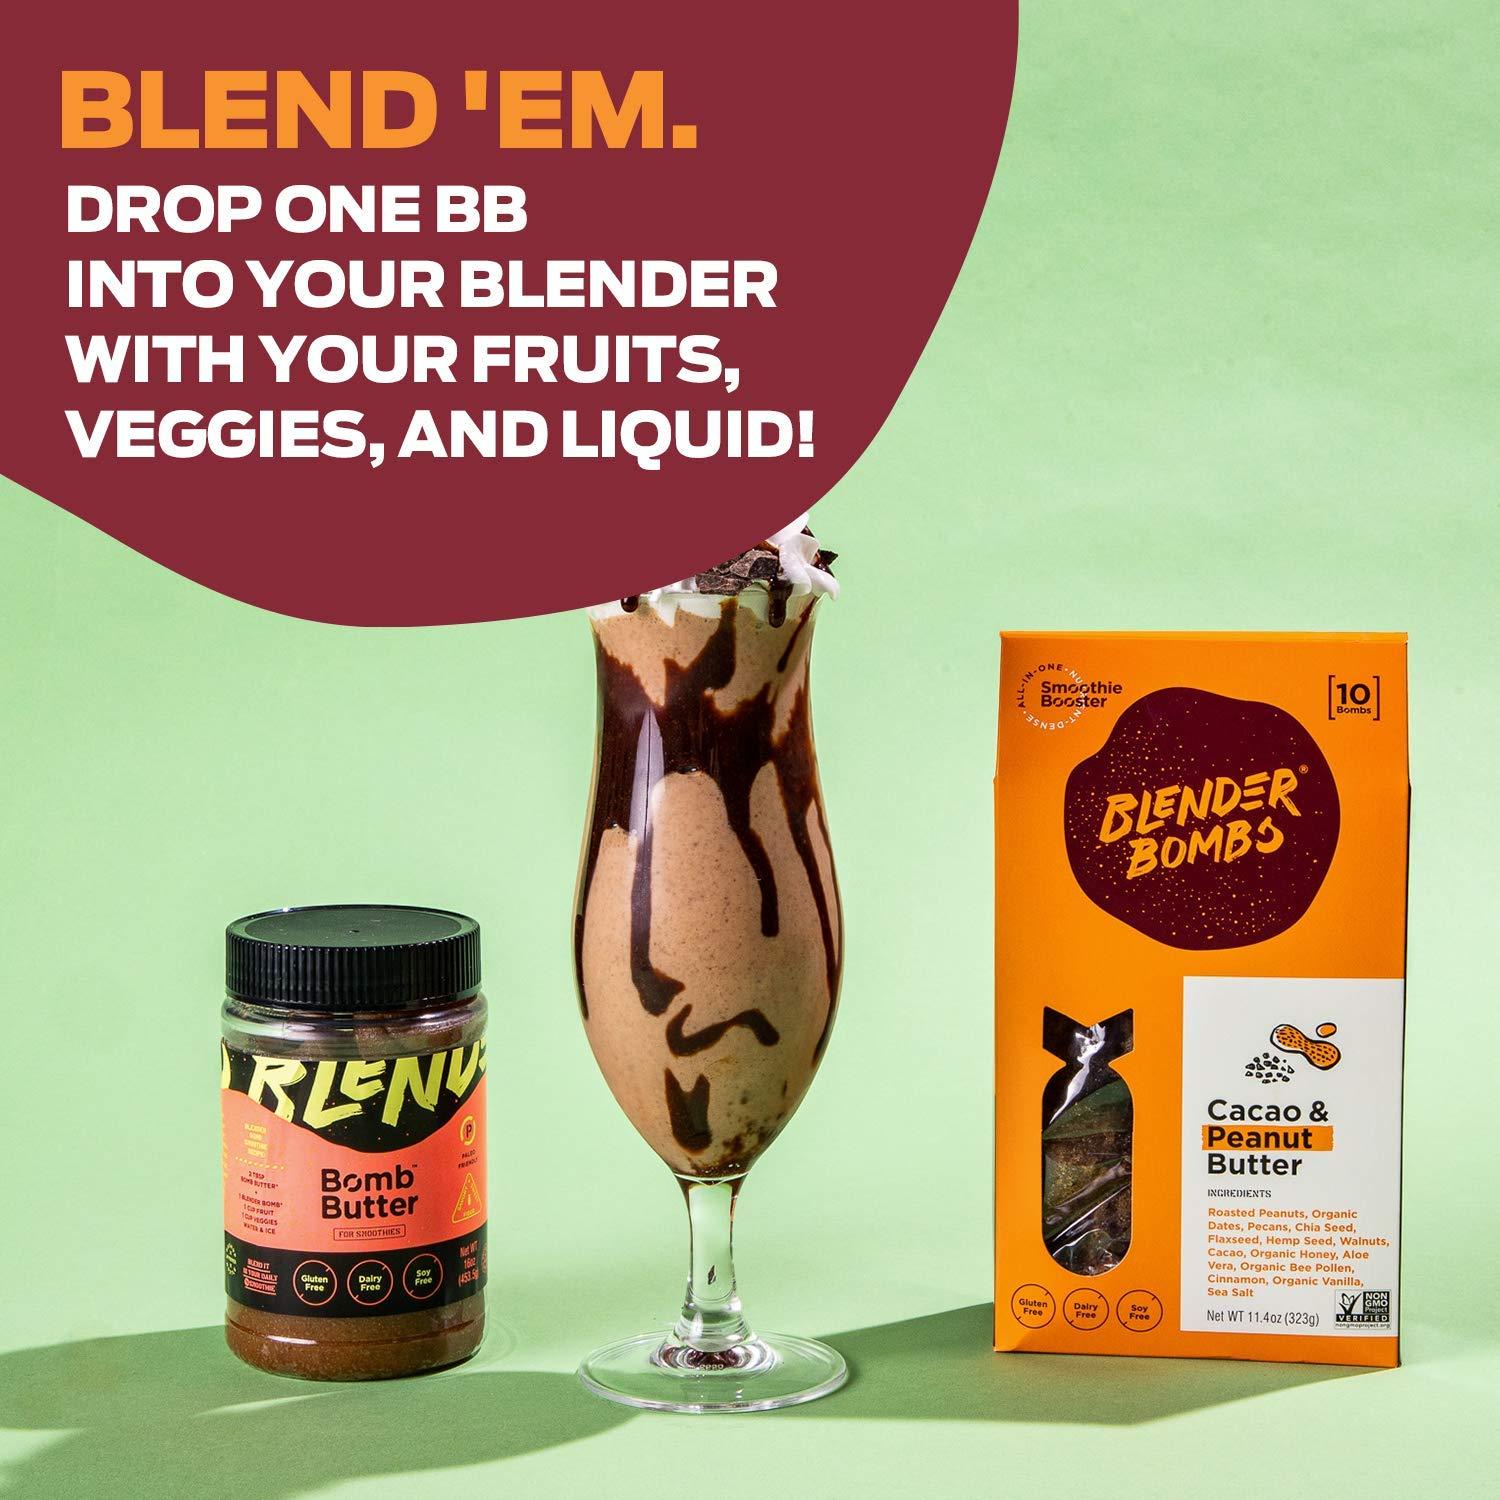 Blender Bombs: Cacao & Peanut Butter